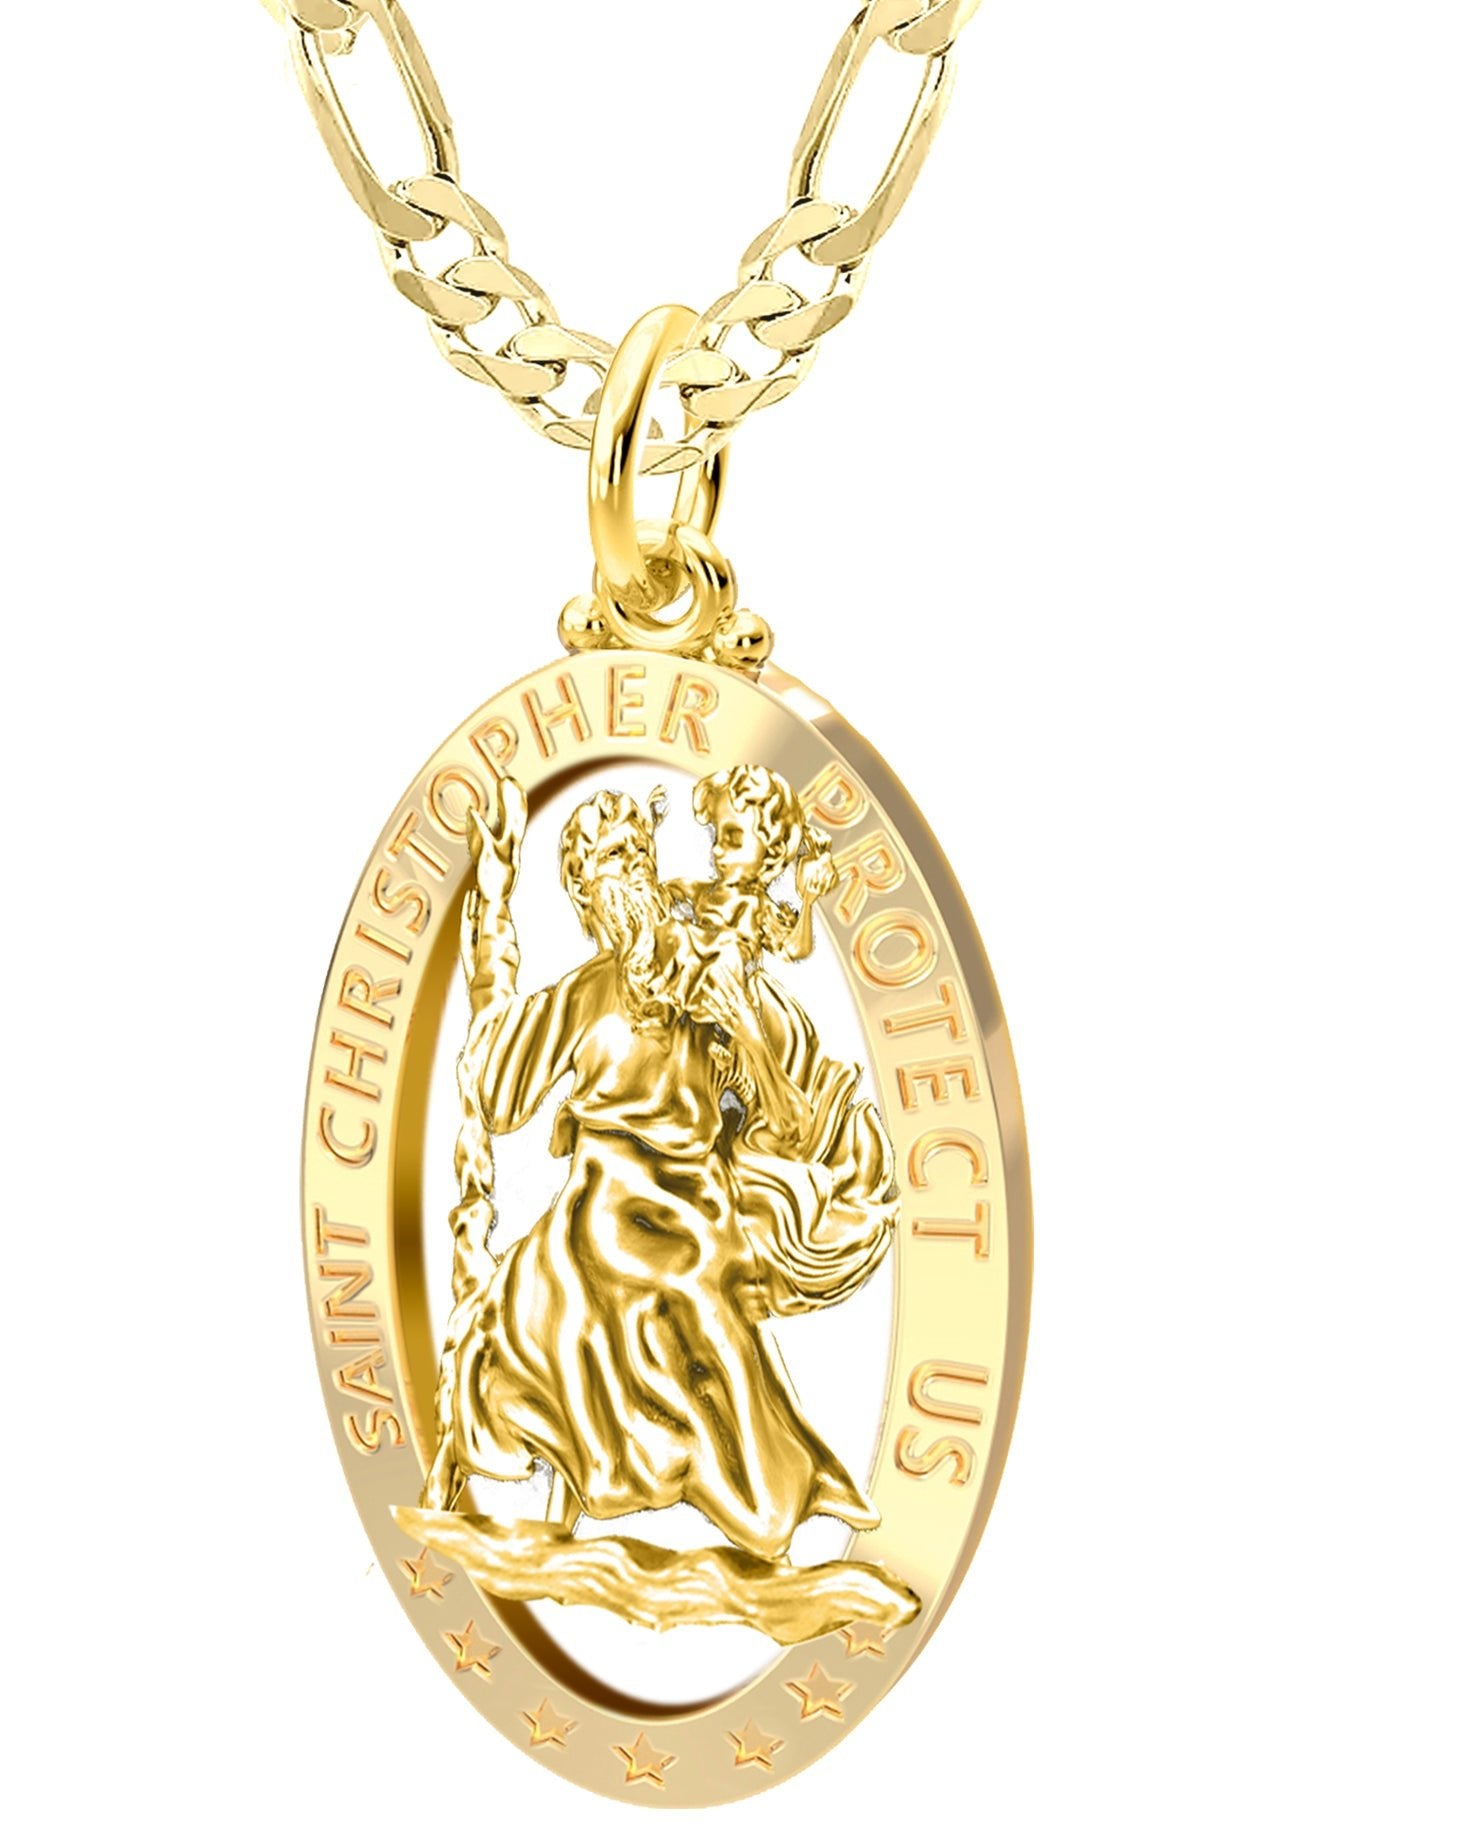 MENDEL Mens Gold St Saint Christopher Medal Pendant Necklace Stainless  Steel Set | eBay